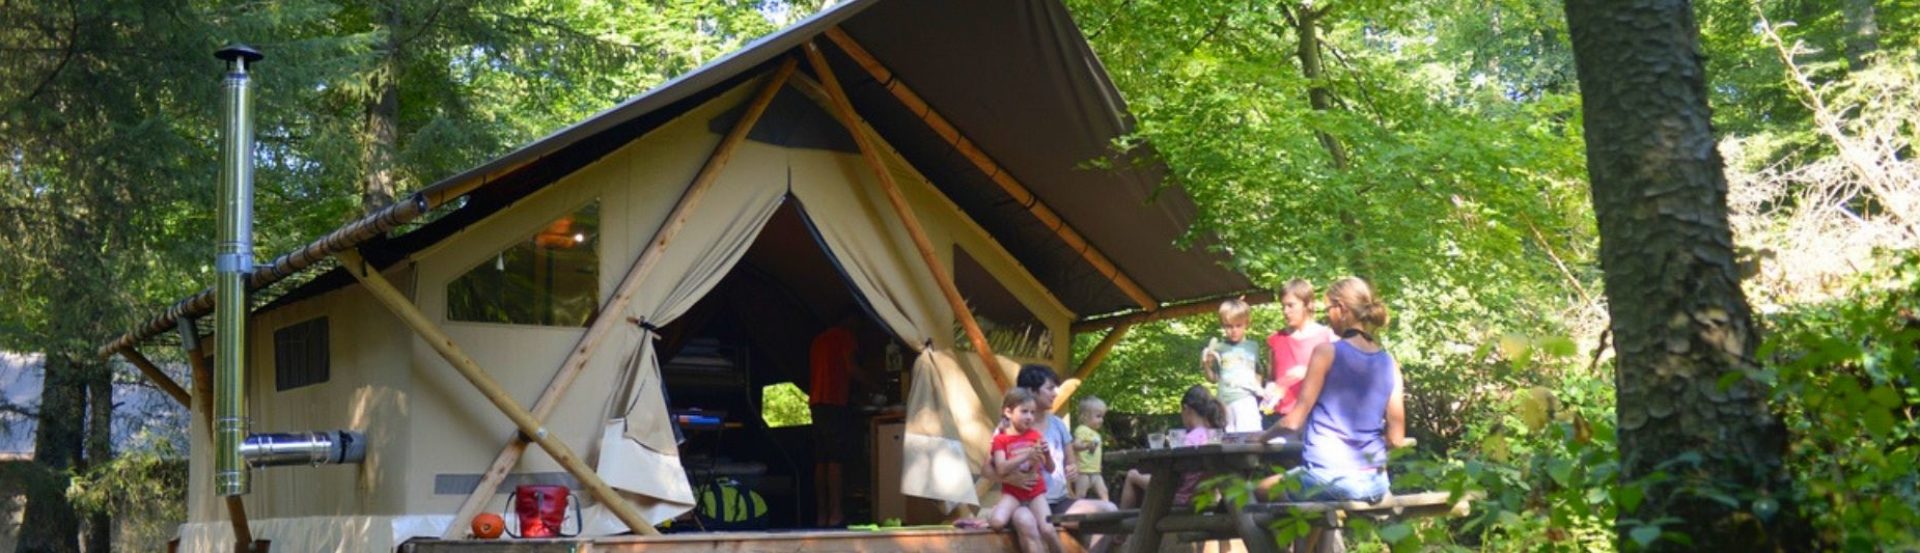 Glamping tent op camping met kamperend gezin